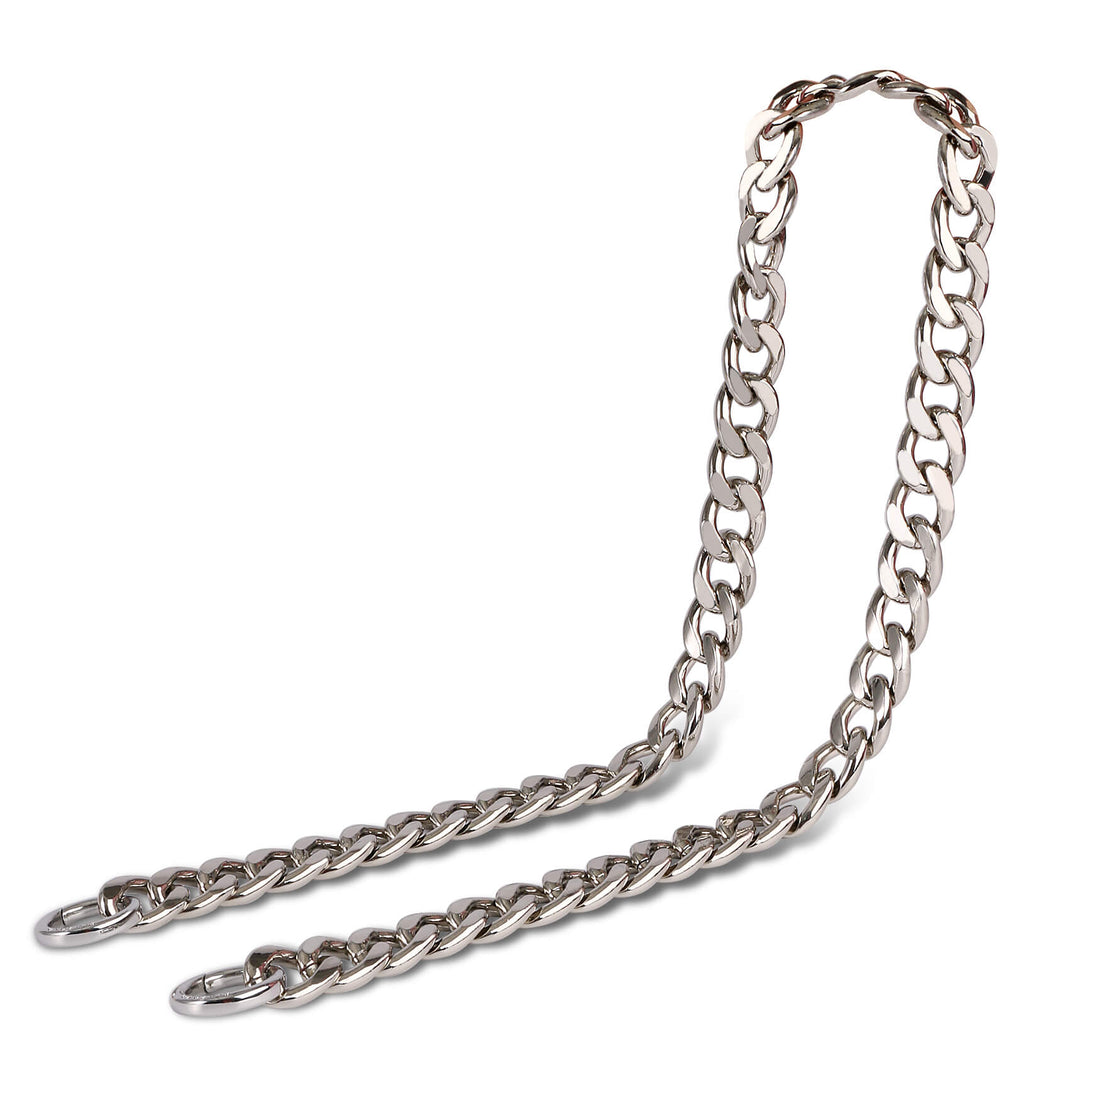 Handbag chunky chain strap- Silver